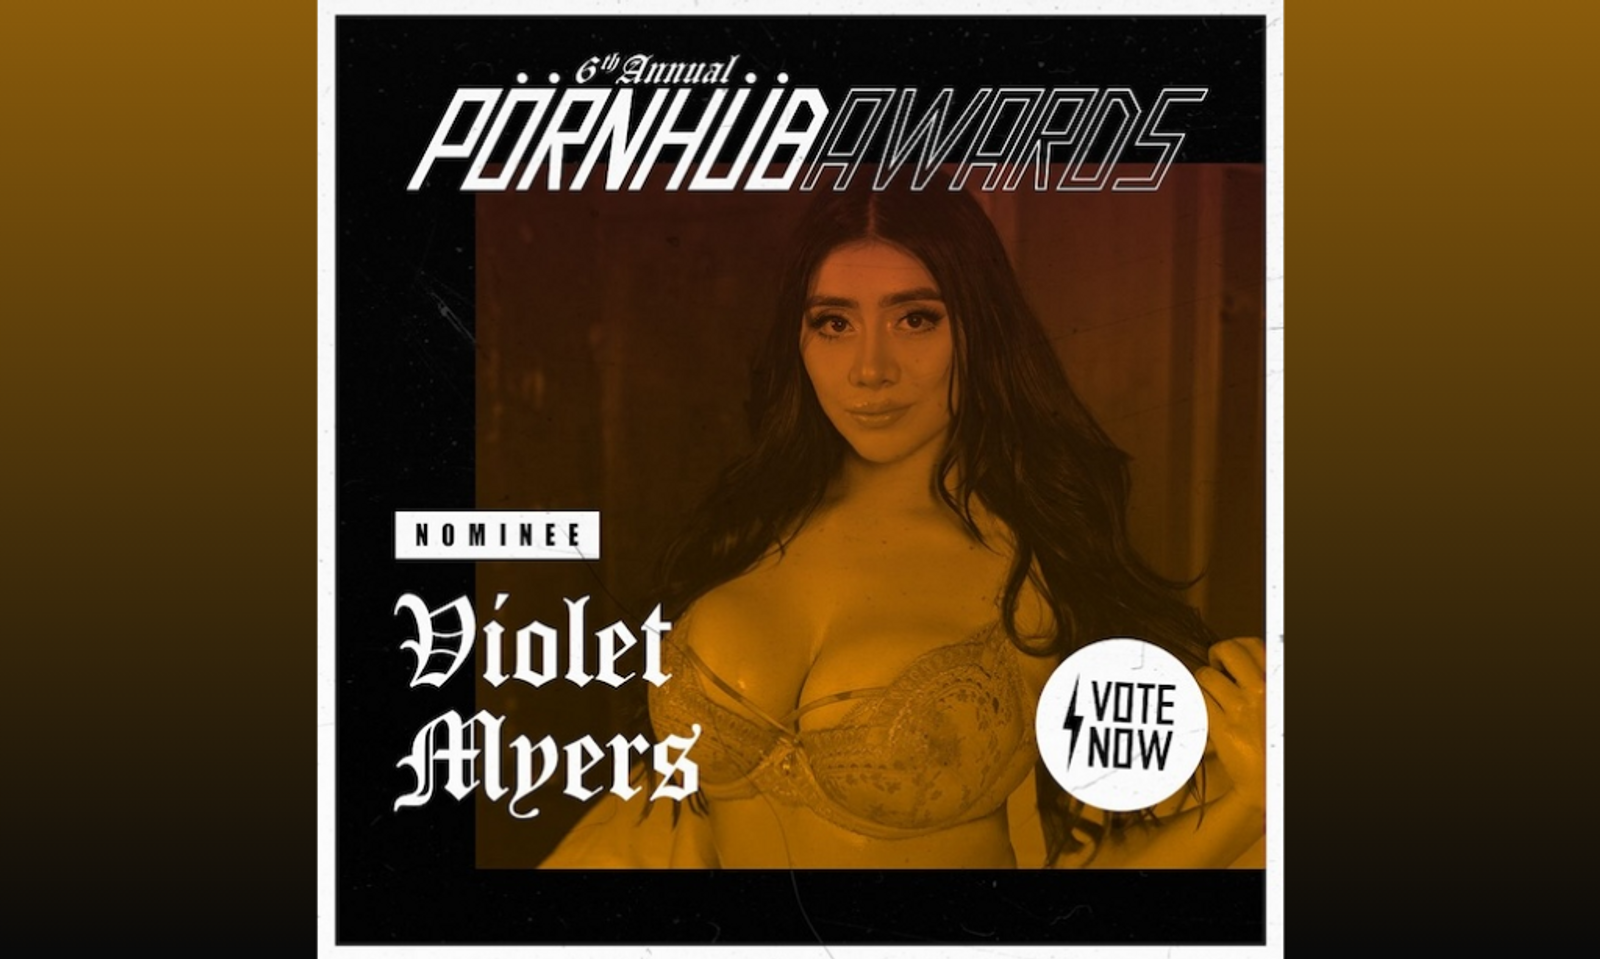 Violet Myers Scores Five Pornhub Awards Nominations